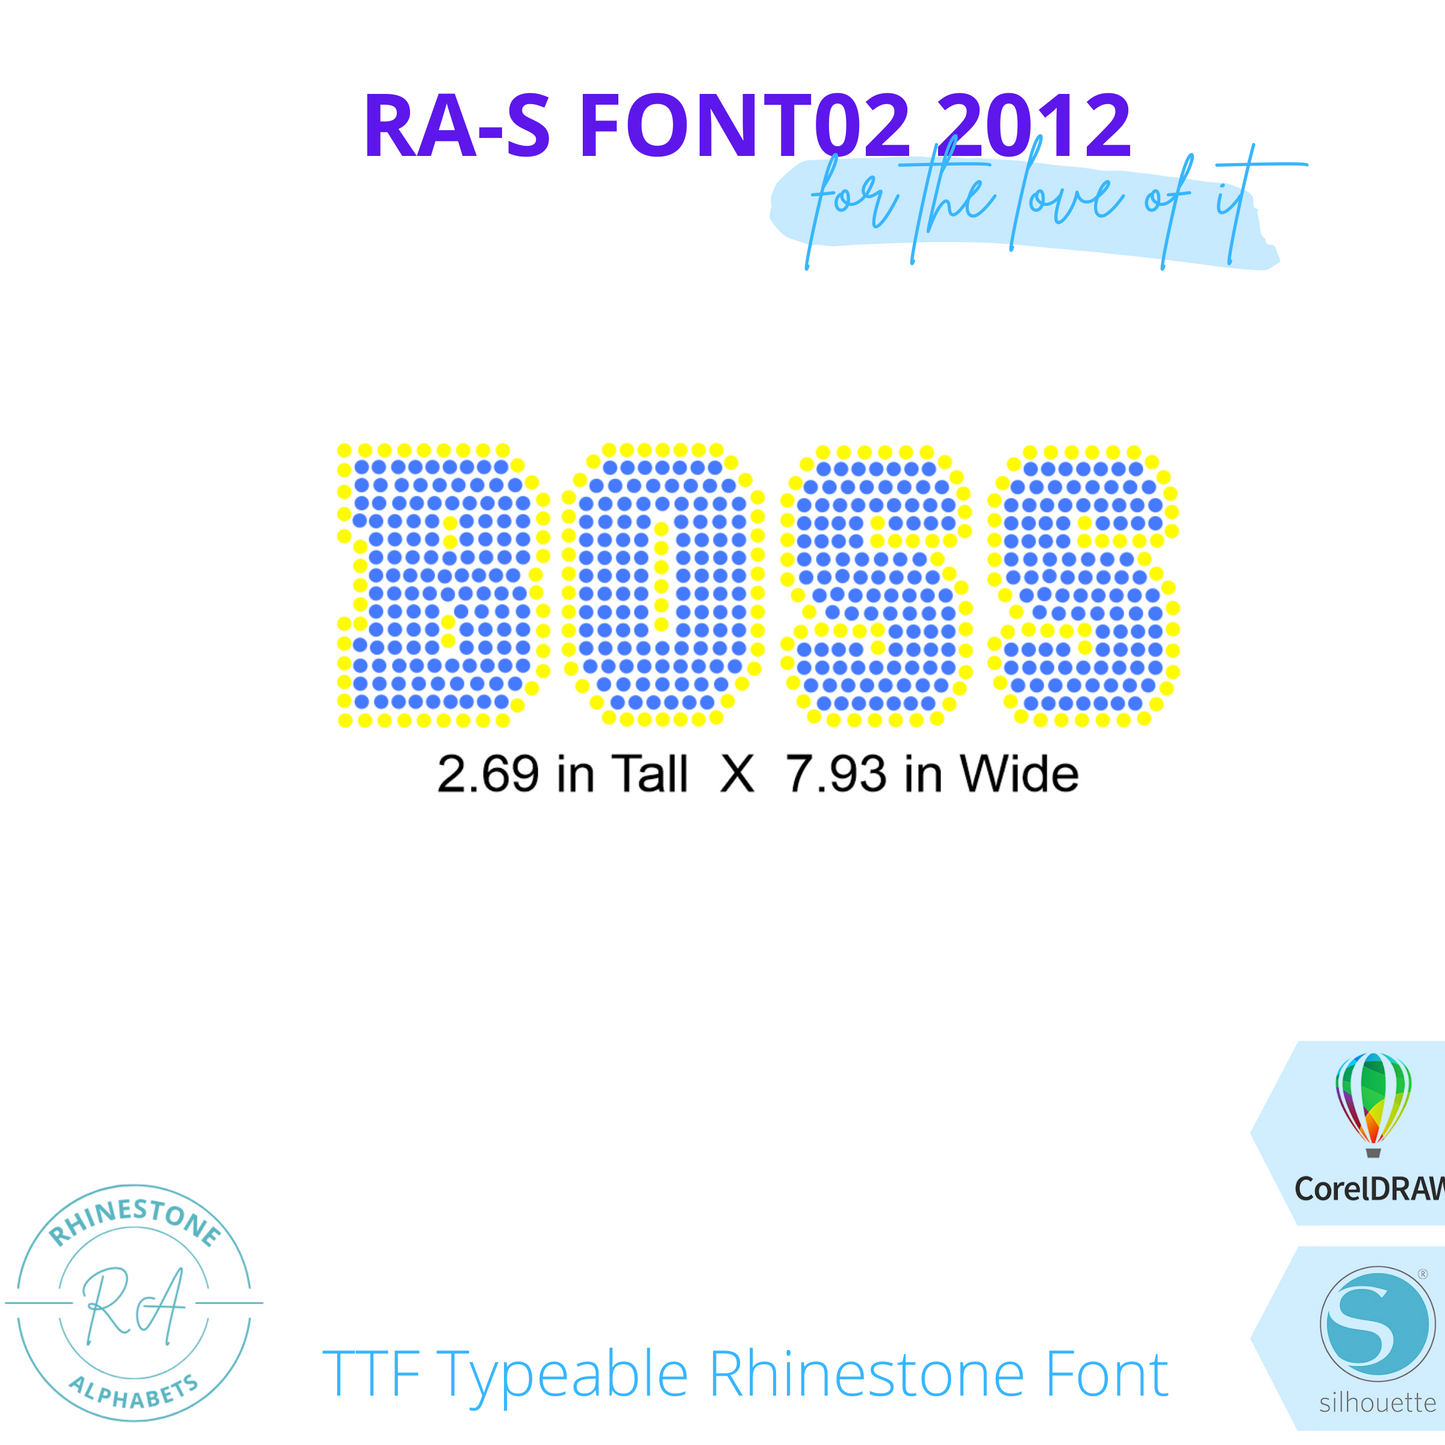 RA-S Font02 2012 - RhinestoneAlphabets